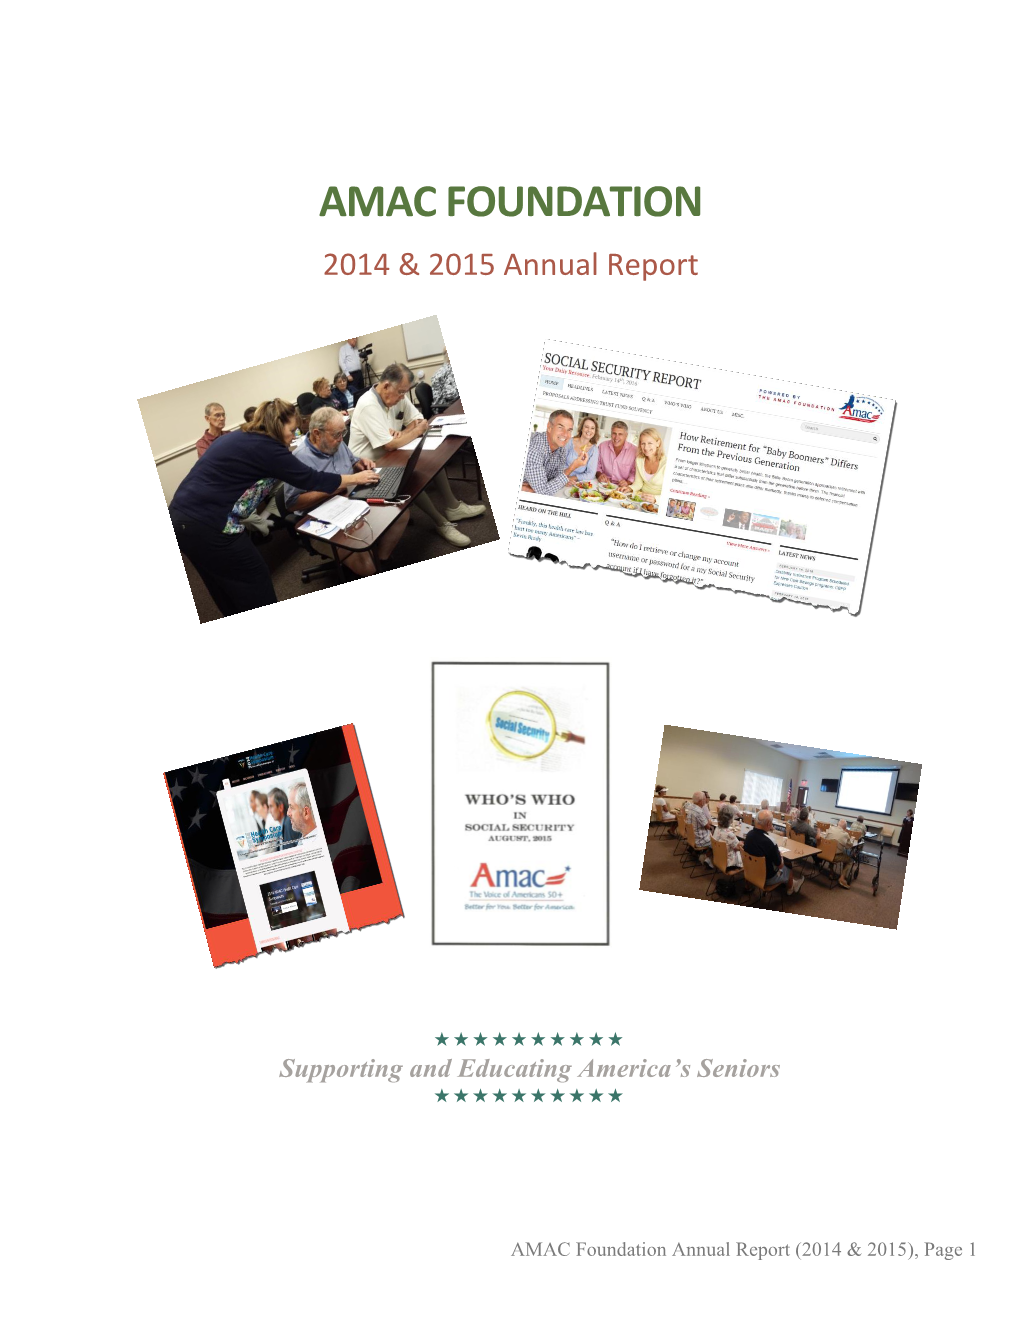 AMAC FOUNDATION 2014 & 2015 Annual Report